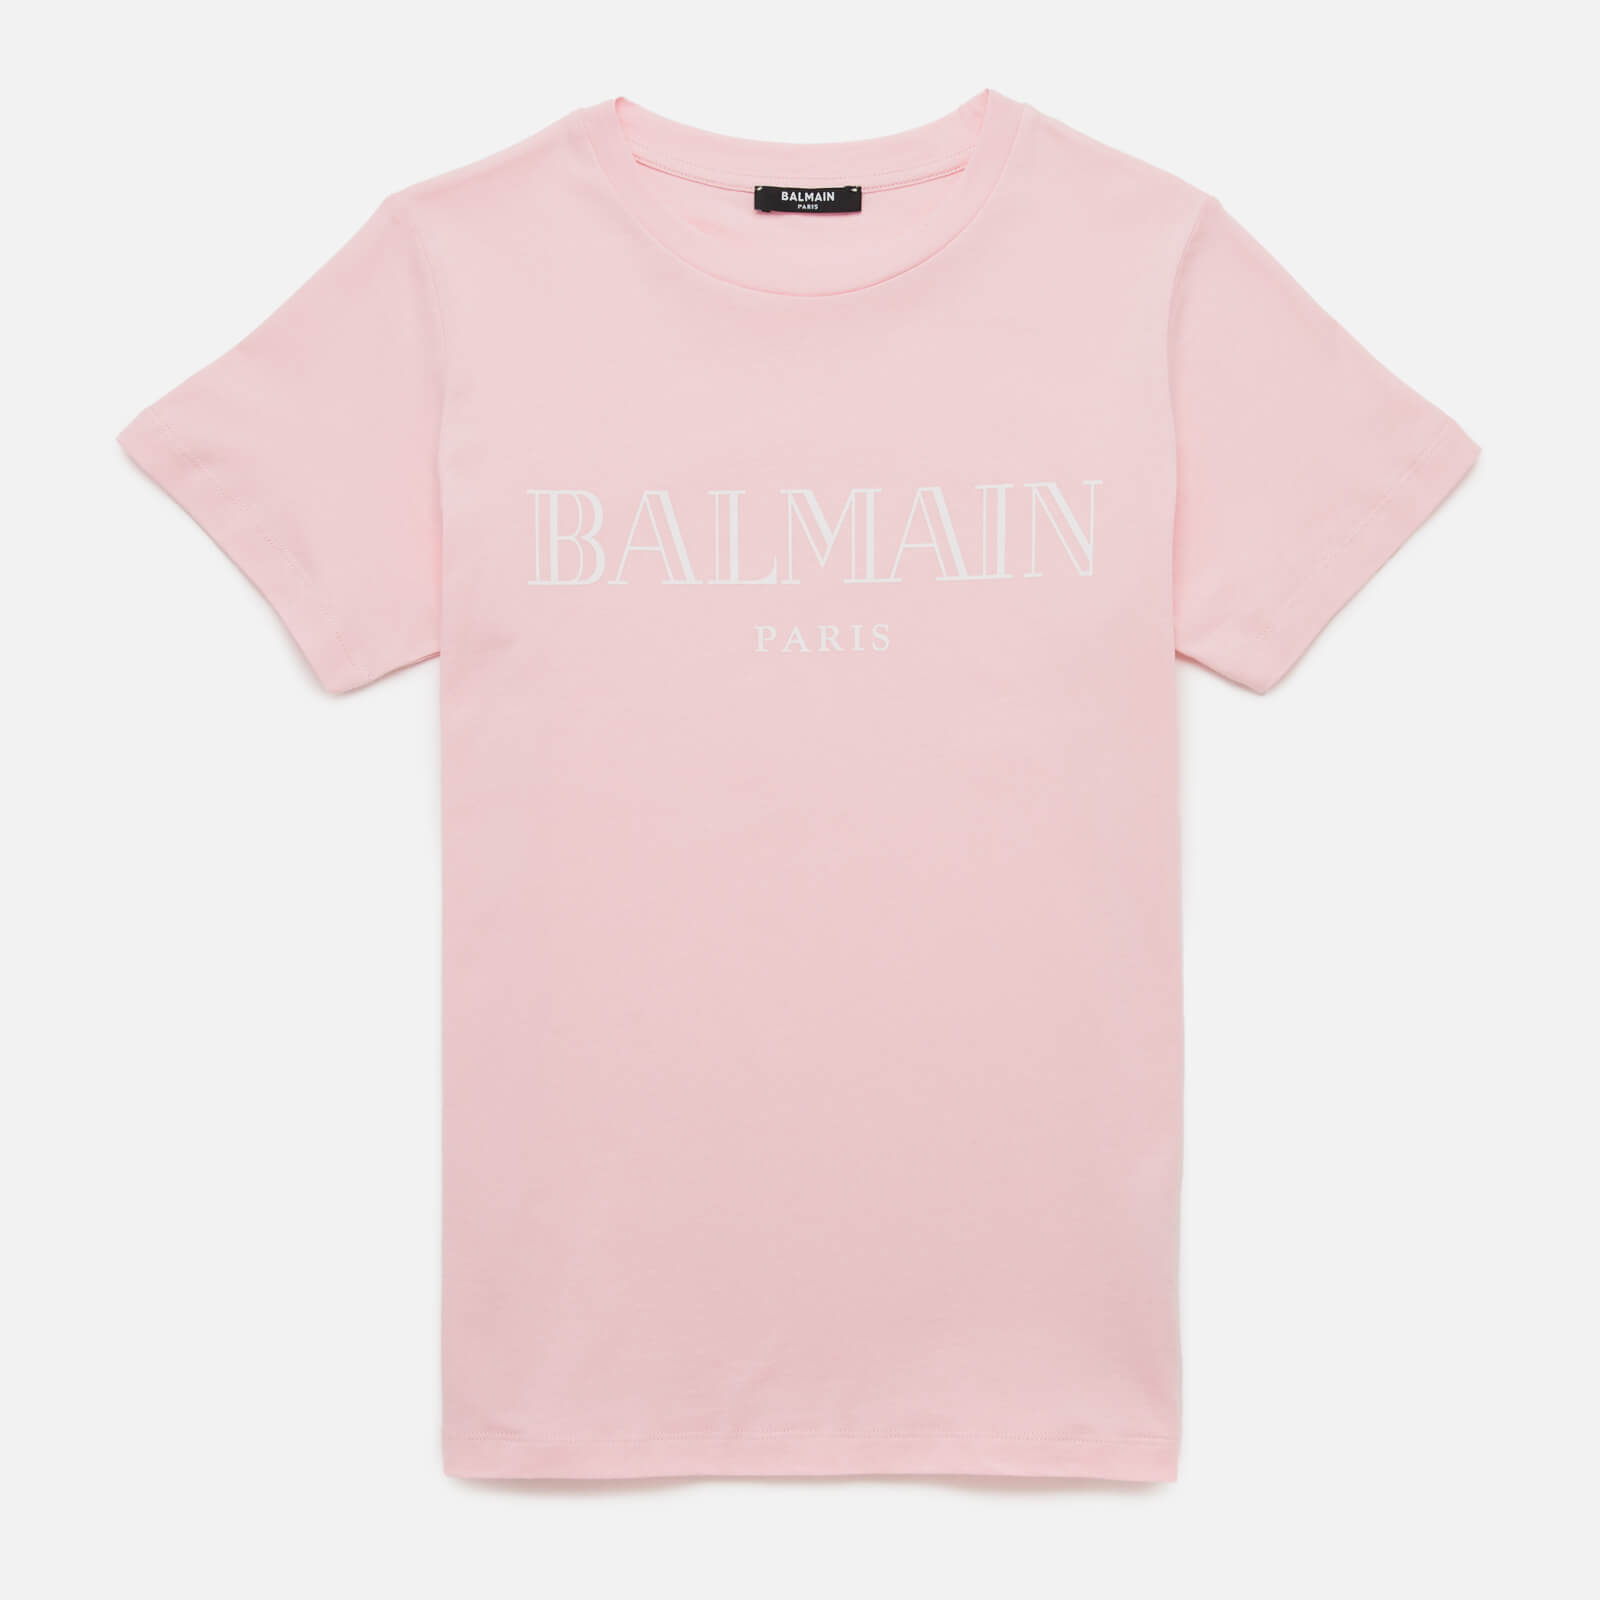 Balmain Boys' T-Shirt - Rosa - 8 Years